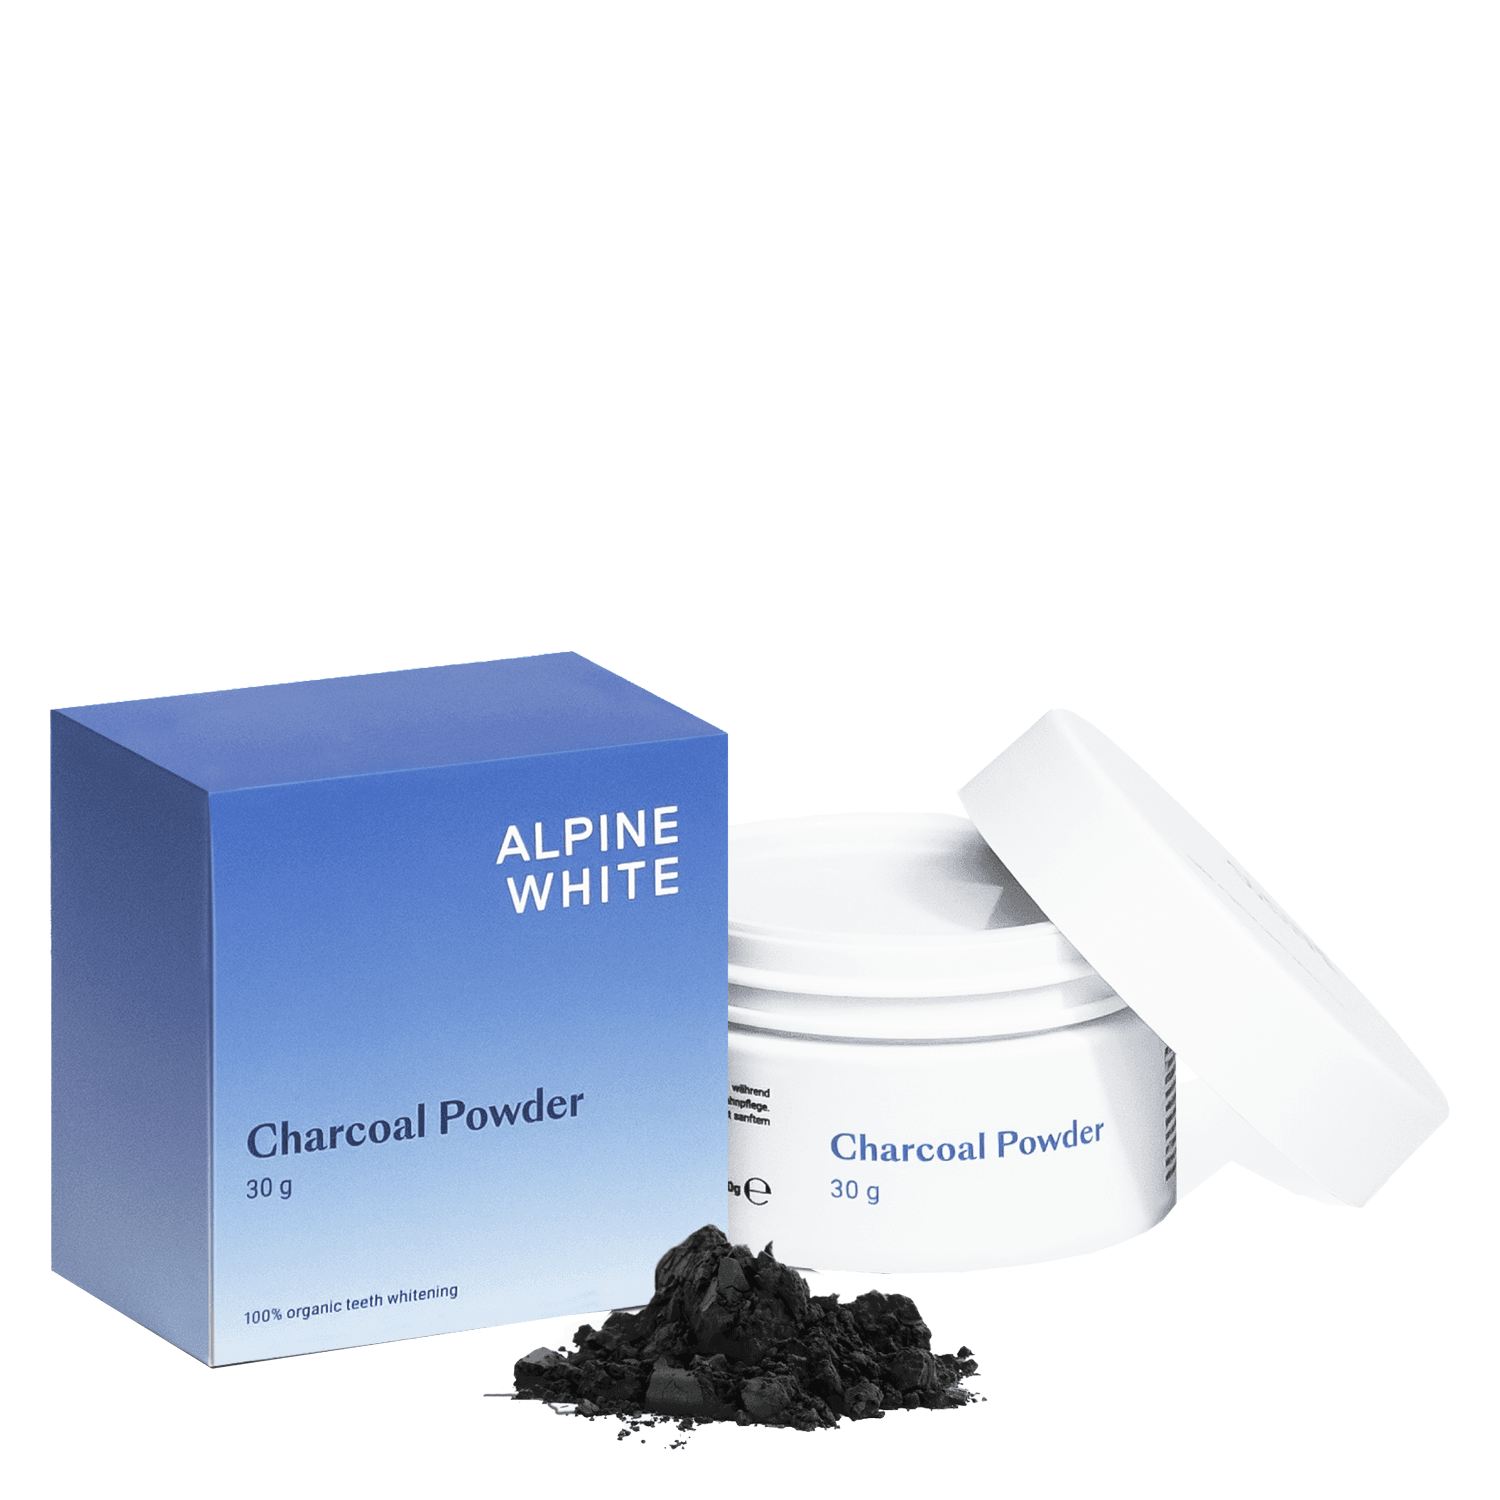 ALPINE WHITE - Charcoal Powder